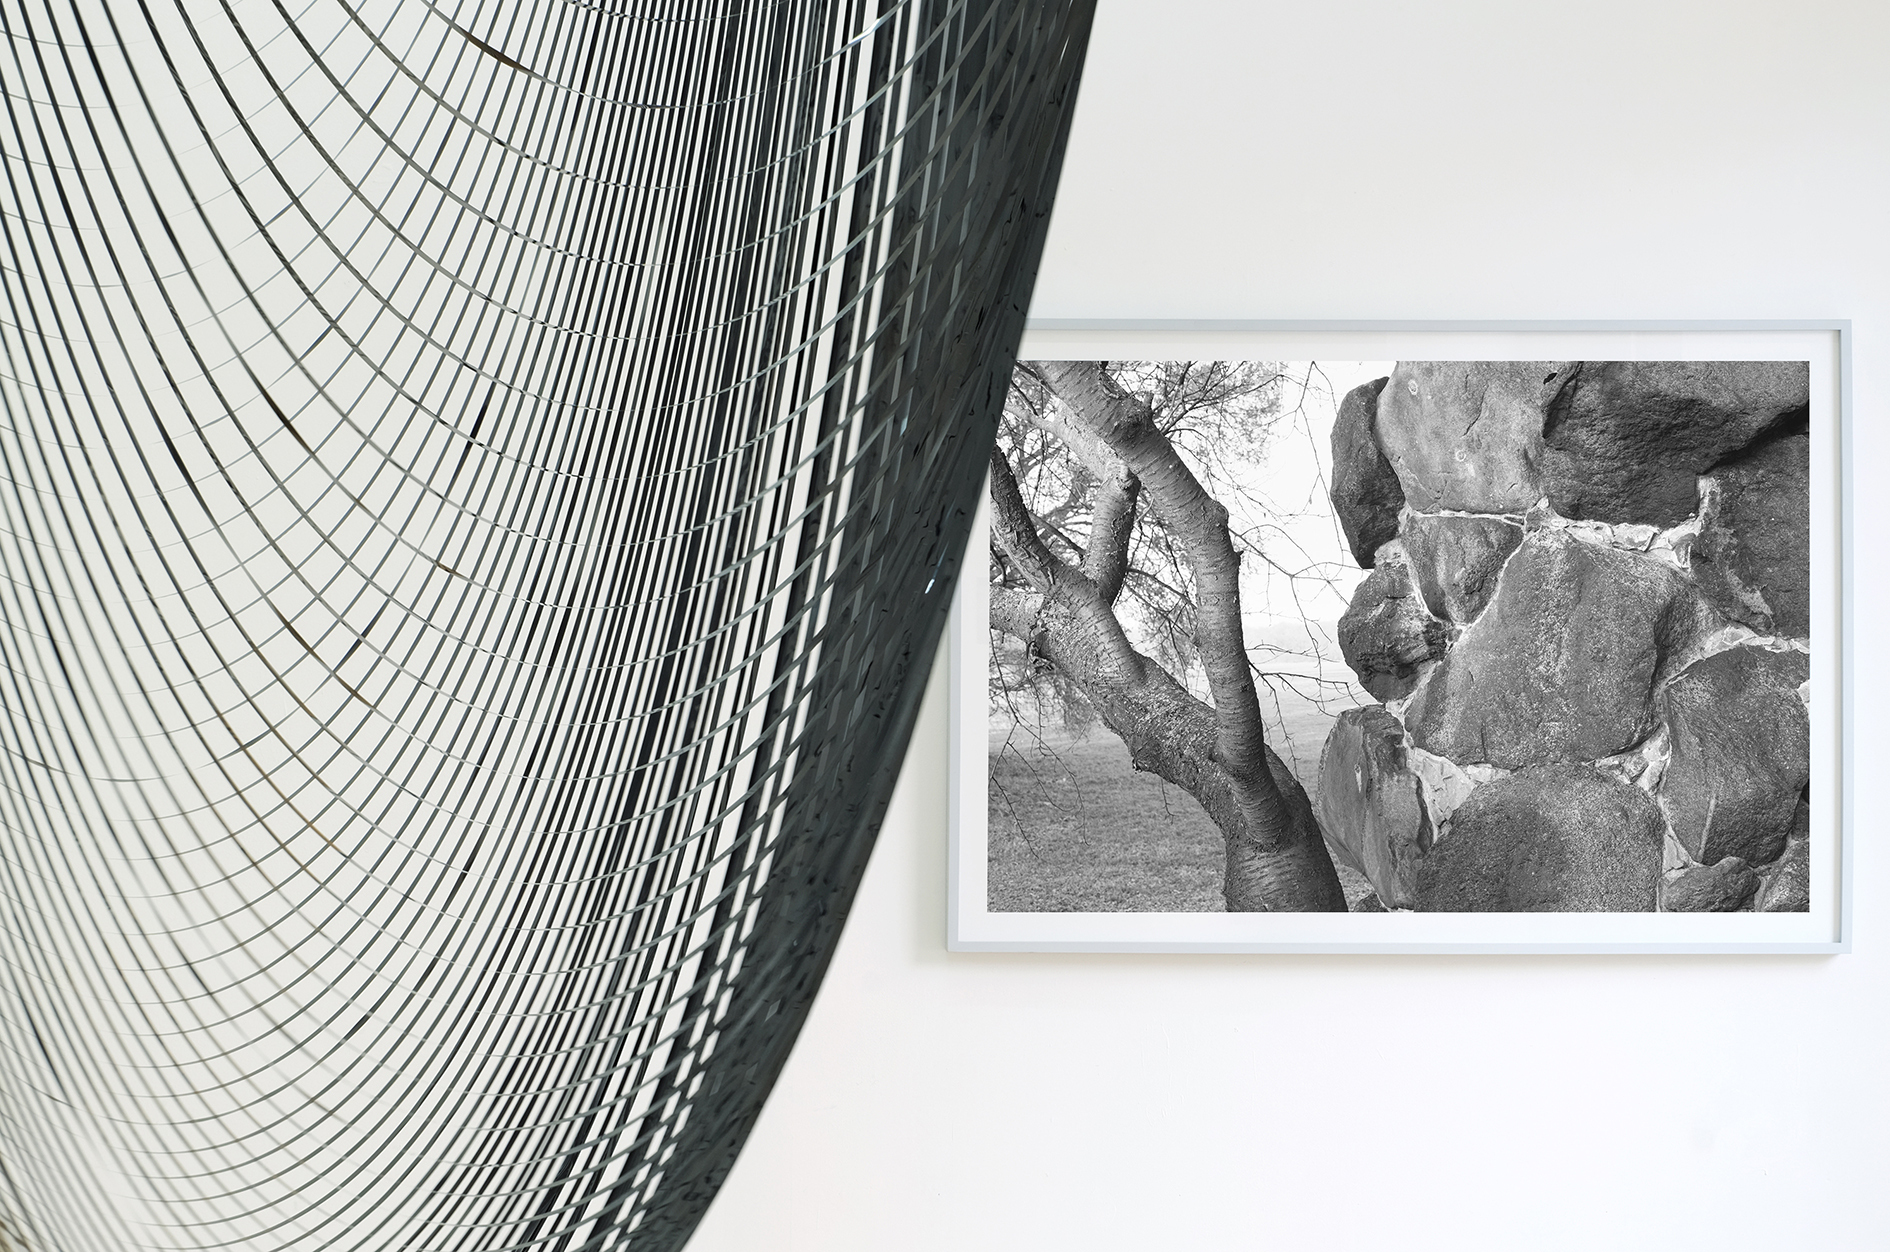 Saskia Groneberg, Luisenklippe, pigment print, 90 × 130 cm, 2015, Vanessa Enriquez, Fluctuations, spatial drawing, VHS magnetic tape, variable dimensions, 2020